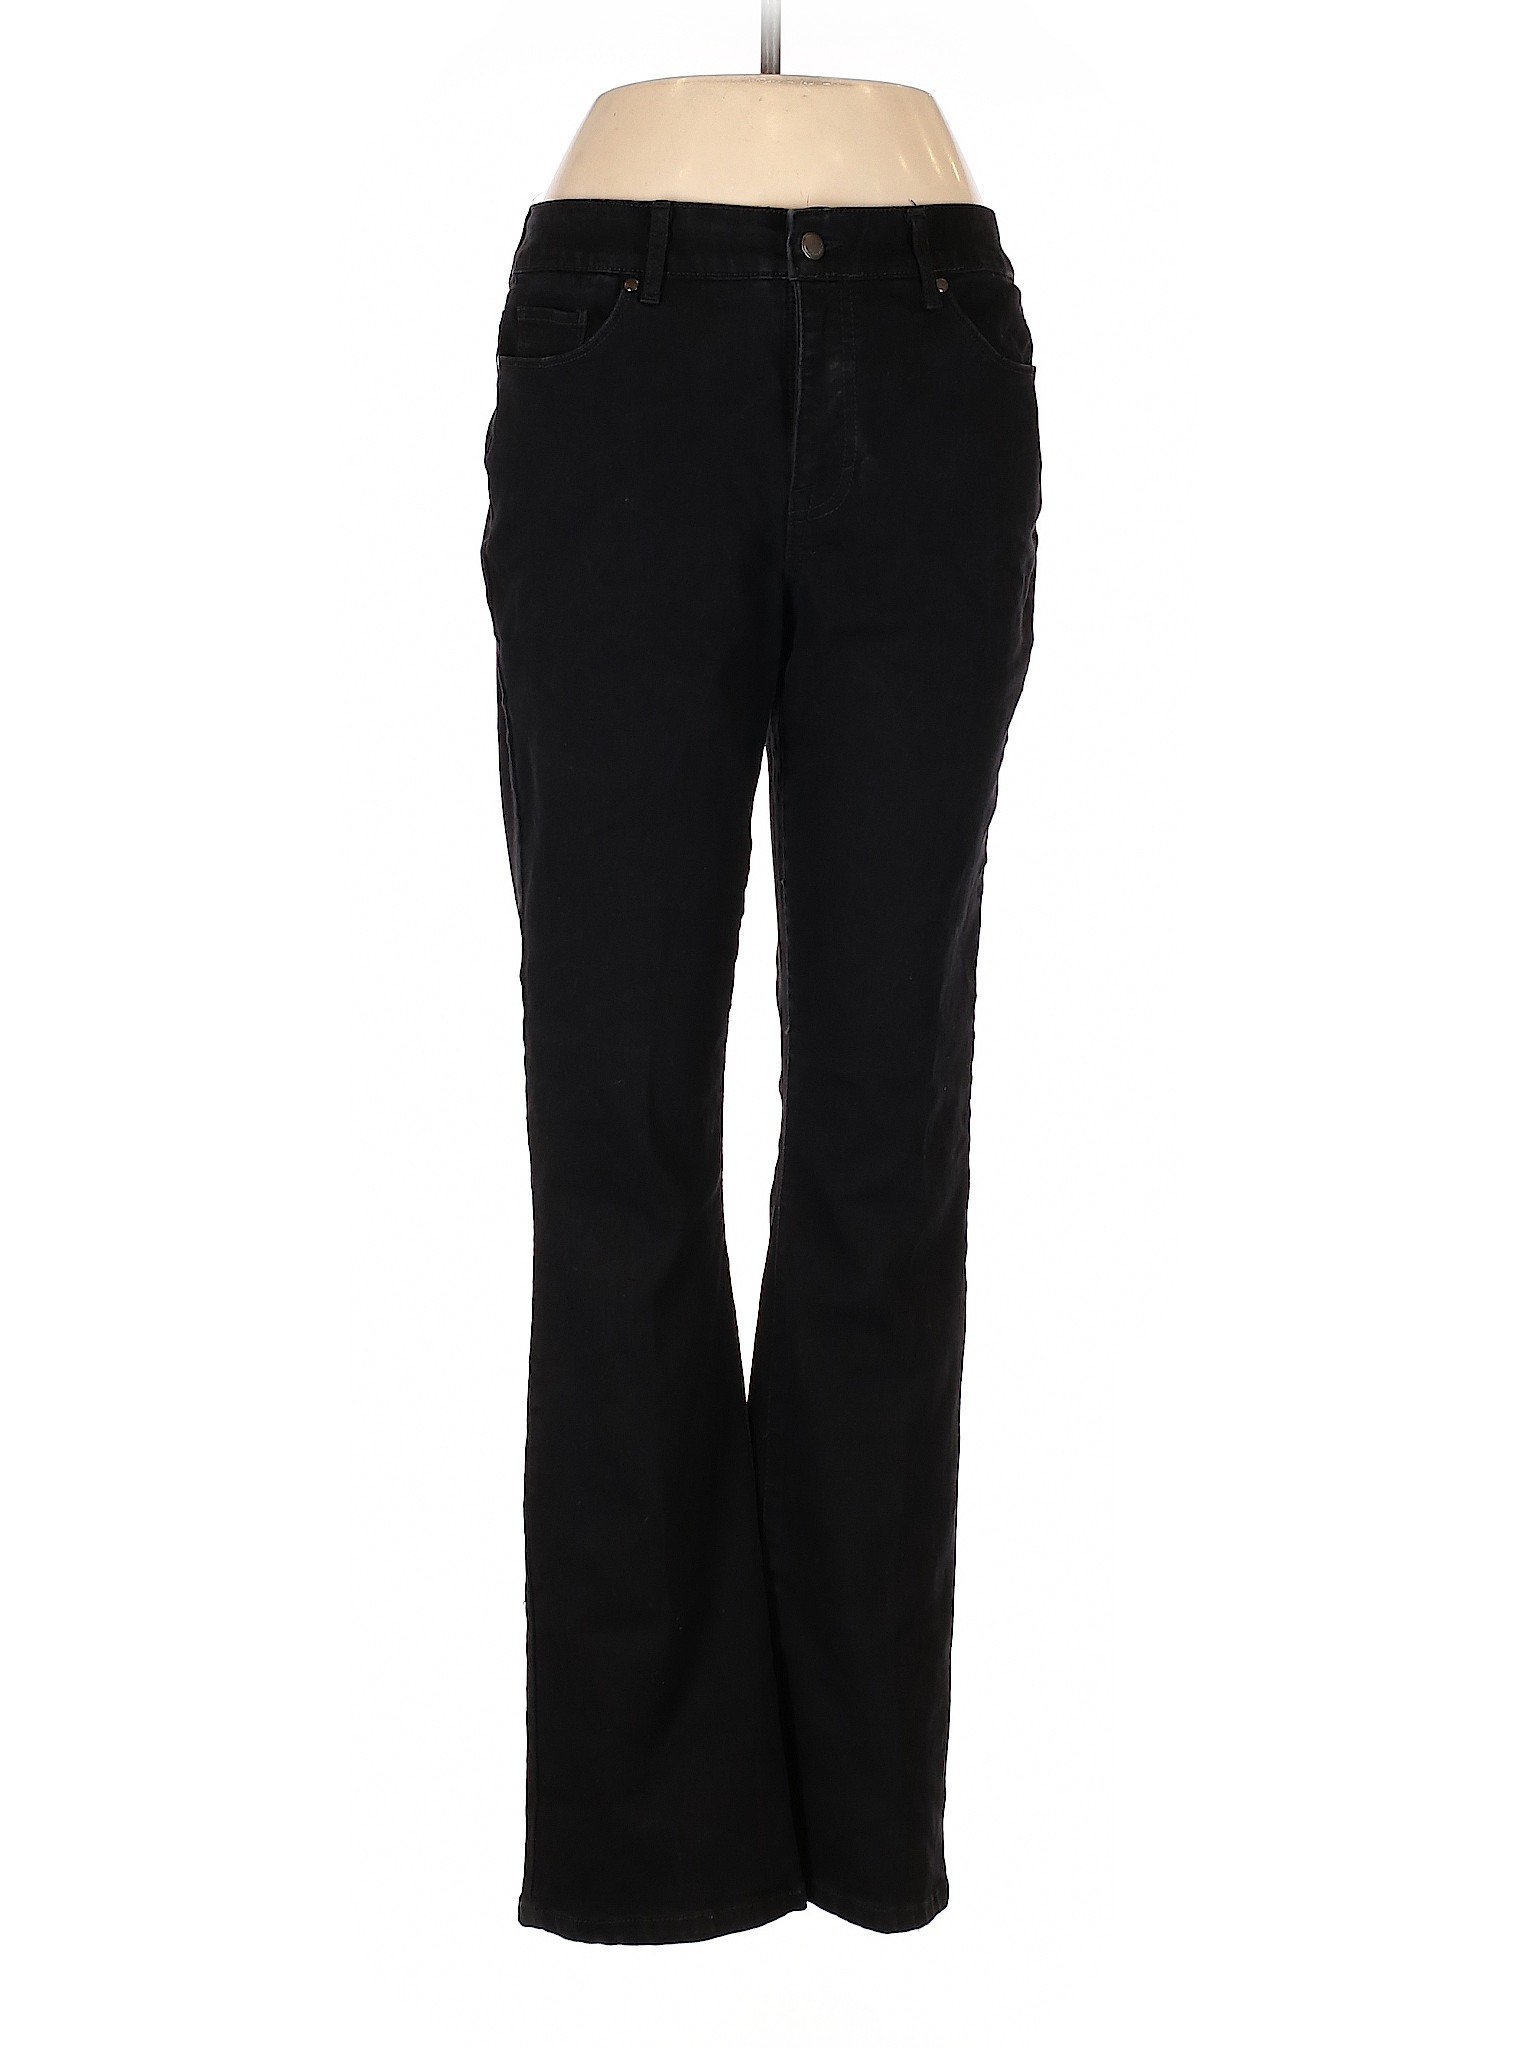 Bandolino Women Black Casual Pants 10 | eBay